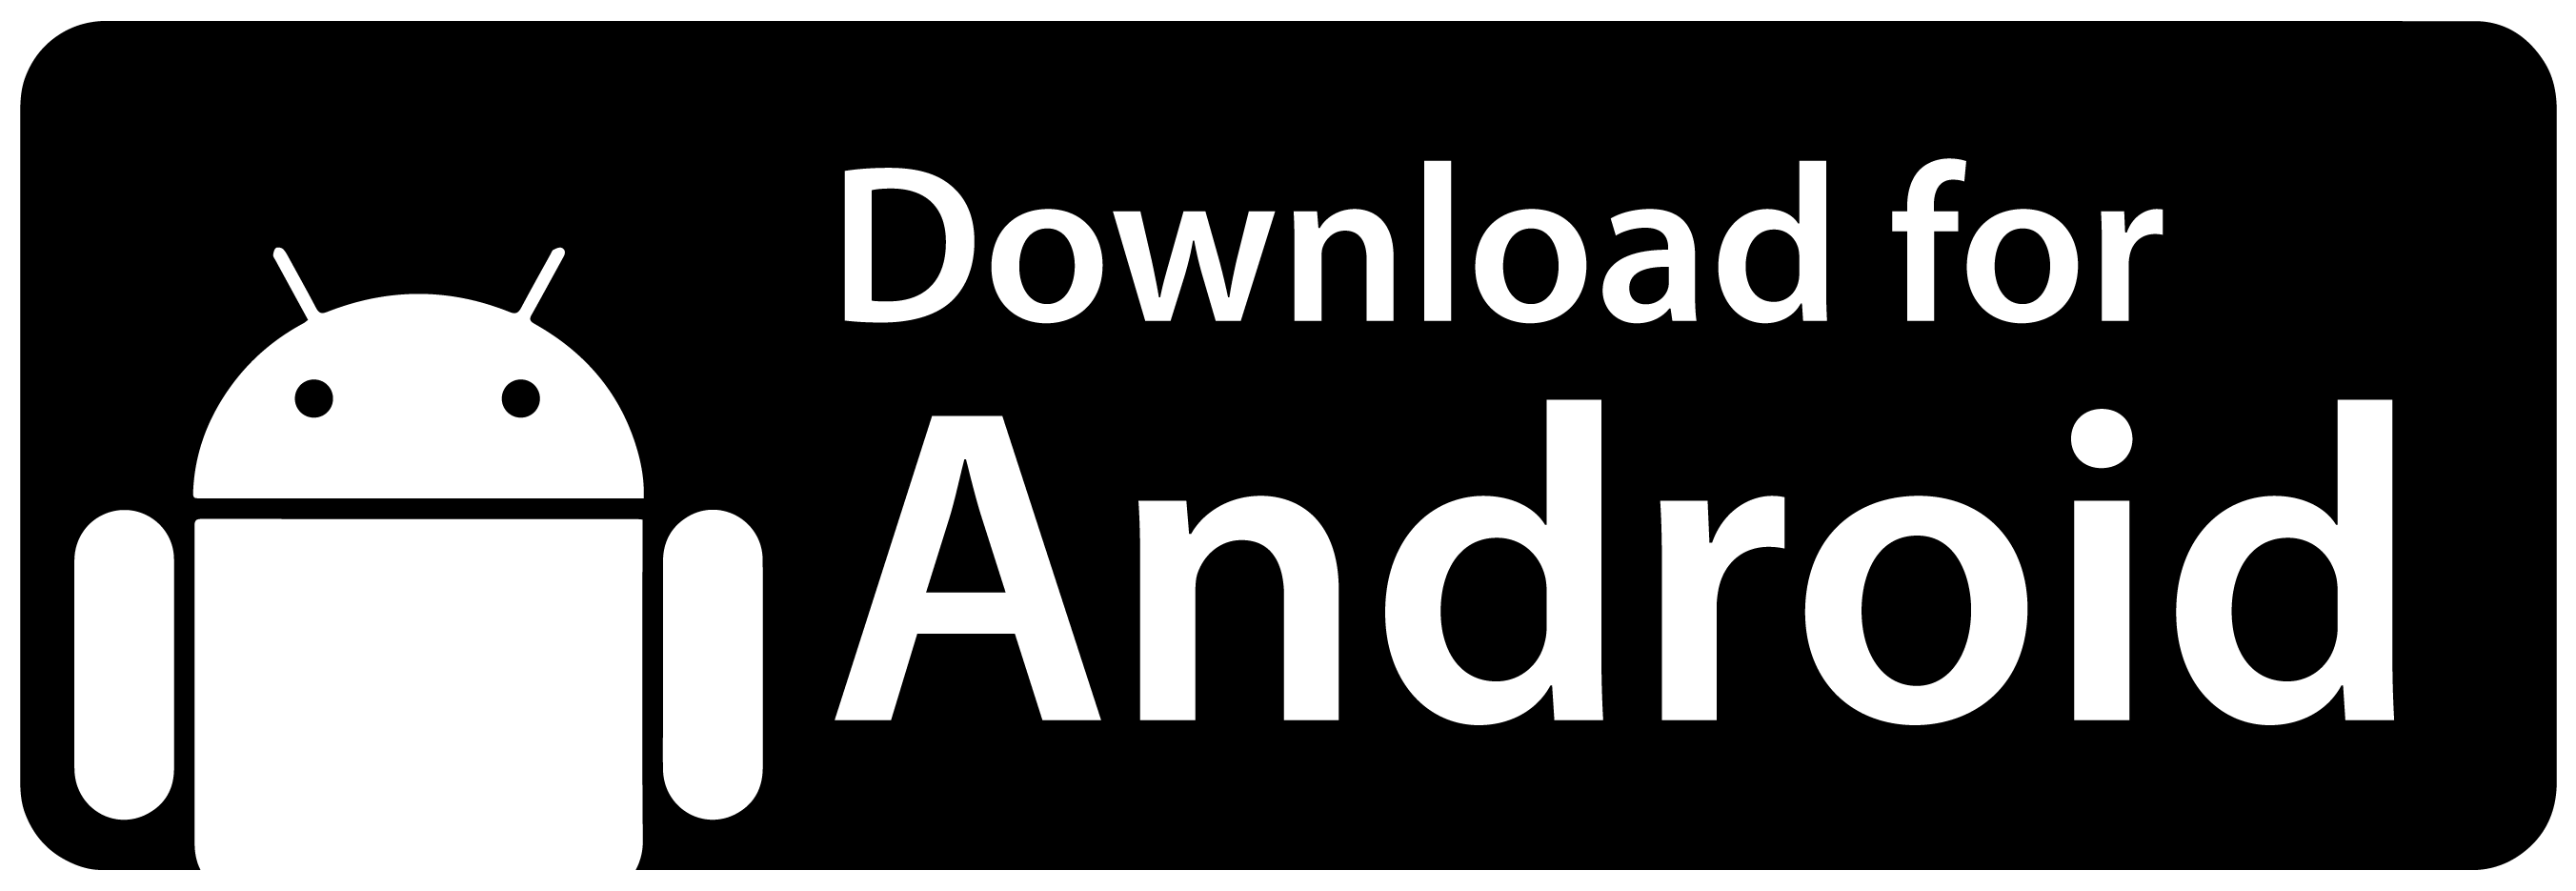 Android приложение загрузка. Доступно для Android. Логотип андроид. Иконка Android. Загрузить на андроид кнопка.